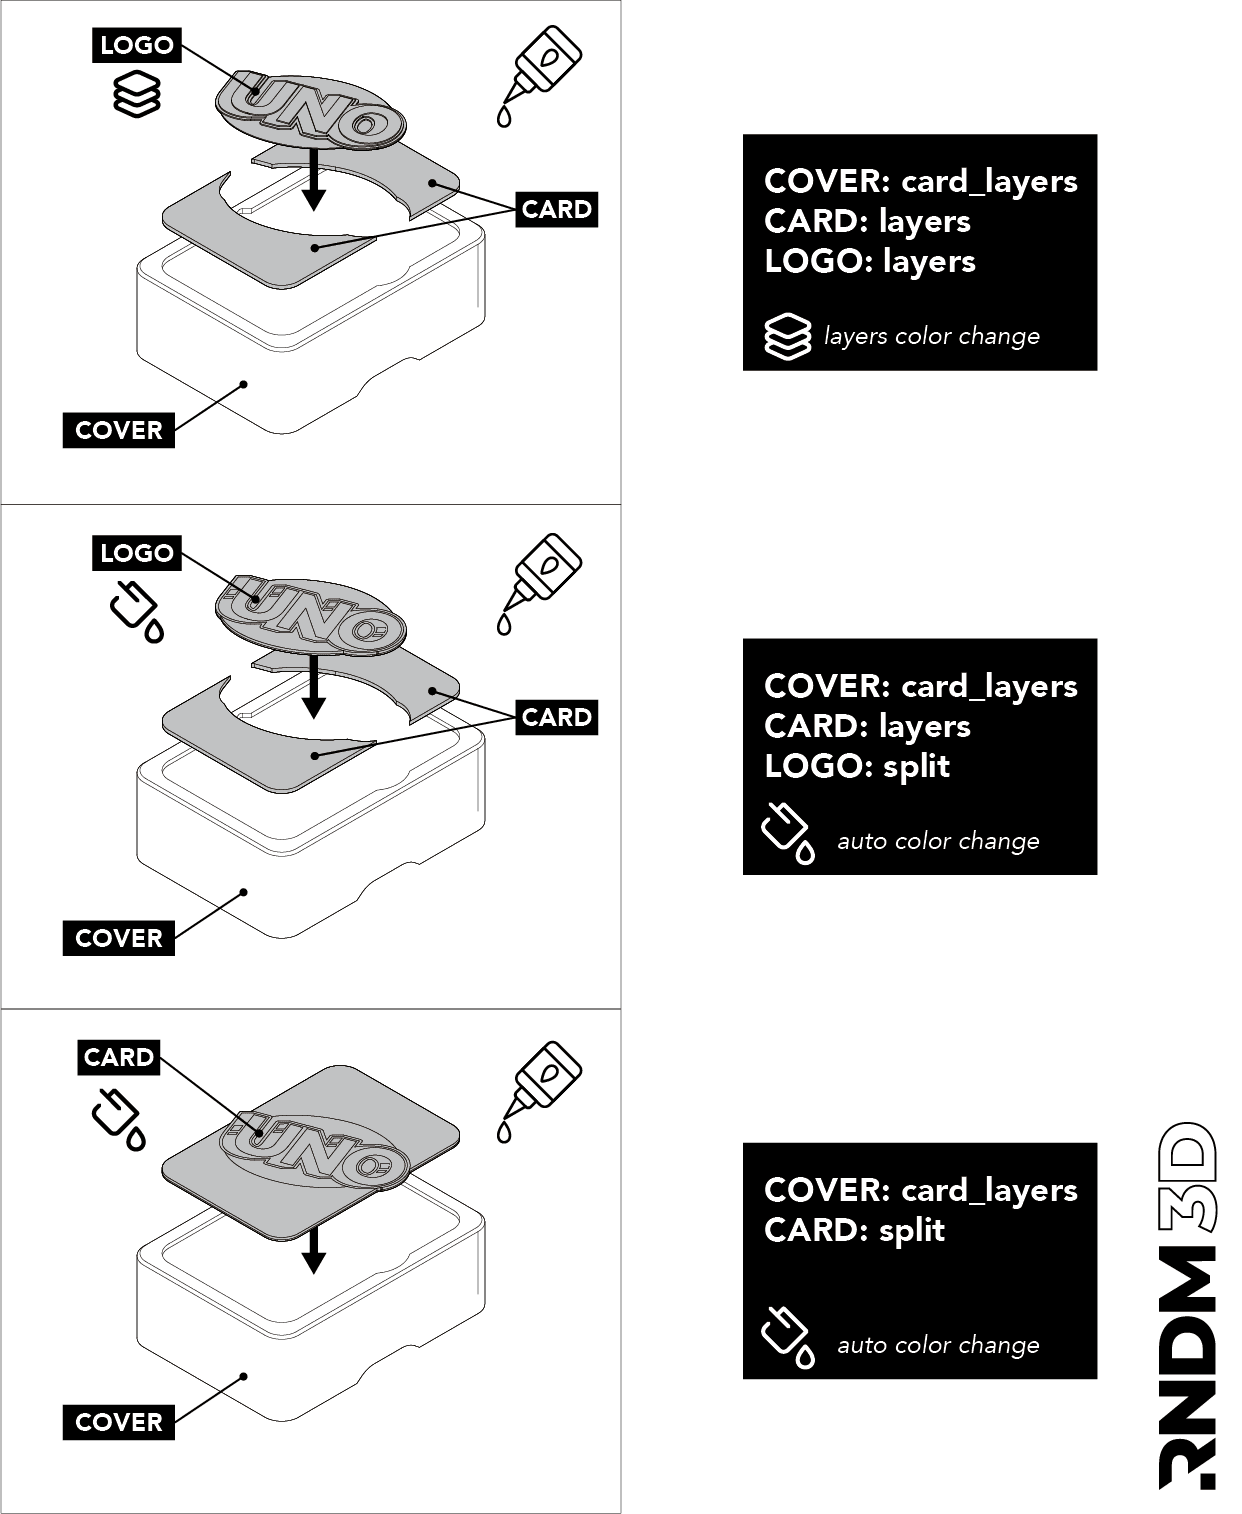 UNO BOX COLORS - Multipart StorageBox *by RNDM3D* 3d model